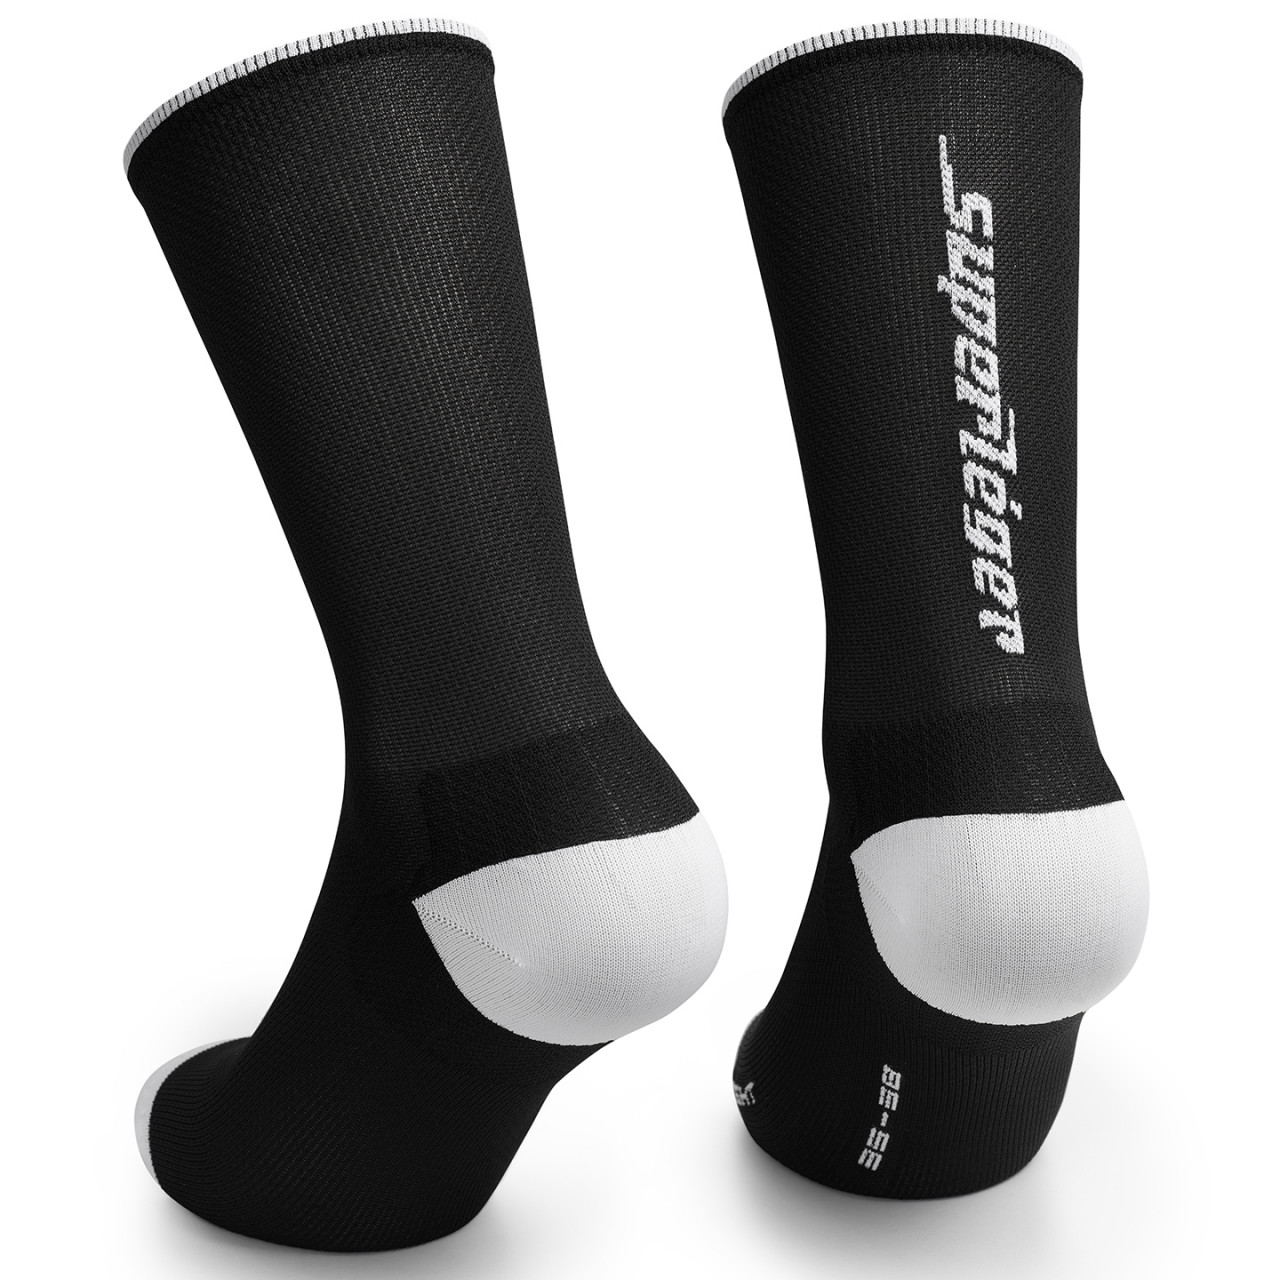 RS Superleger Cycling Socks